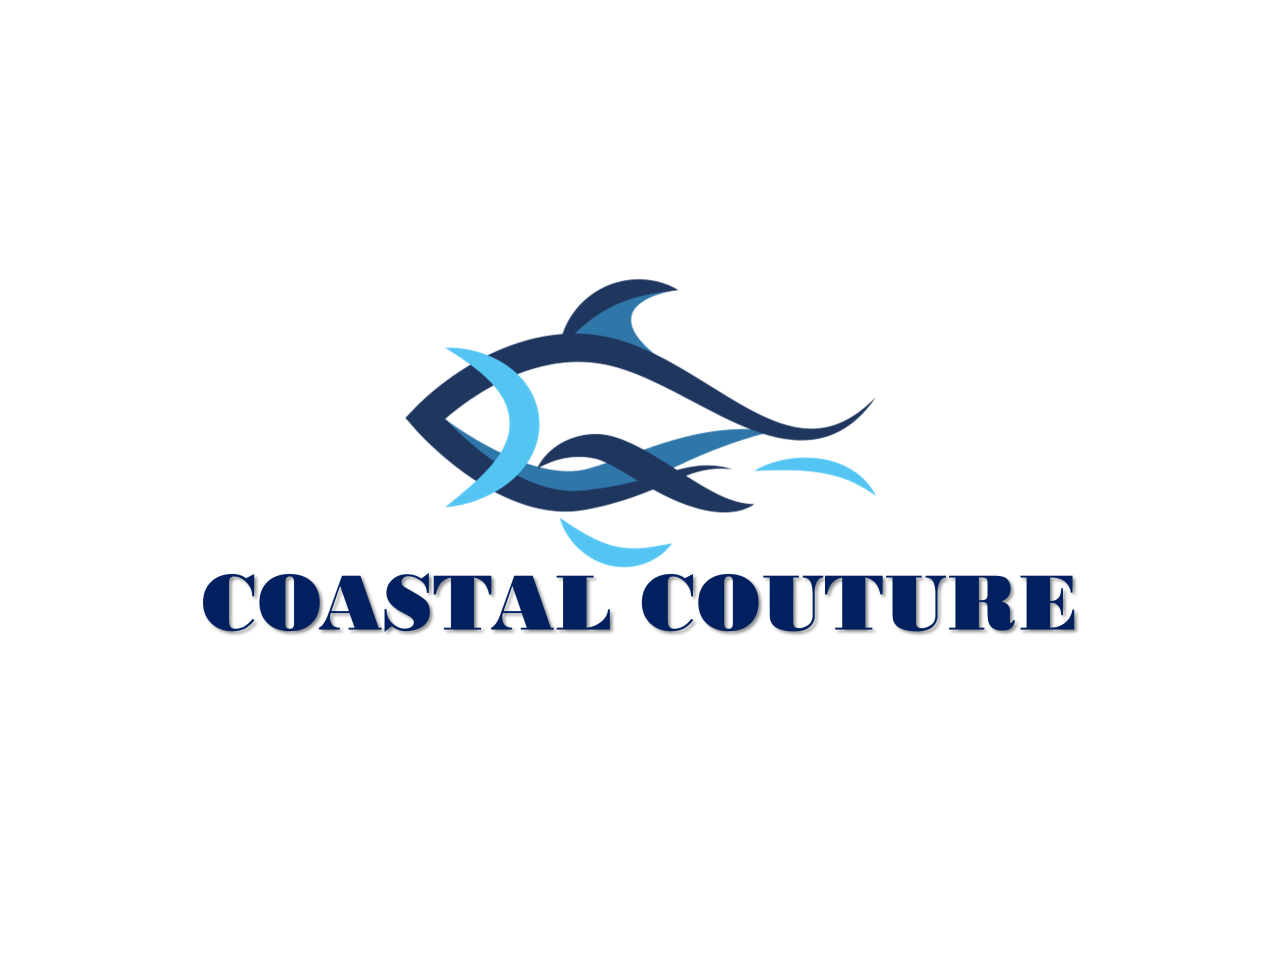 Coastal Couture's logo